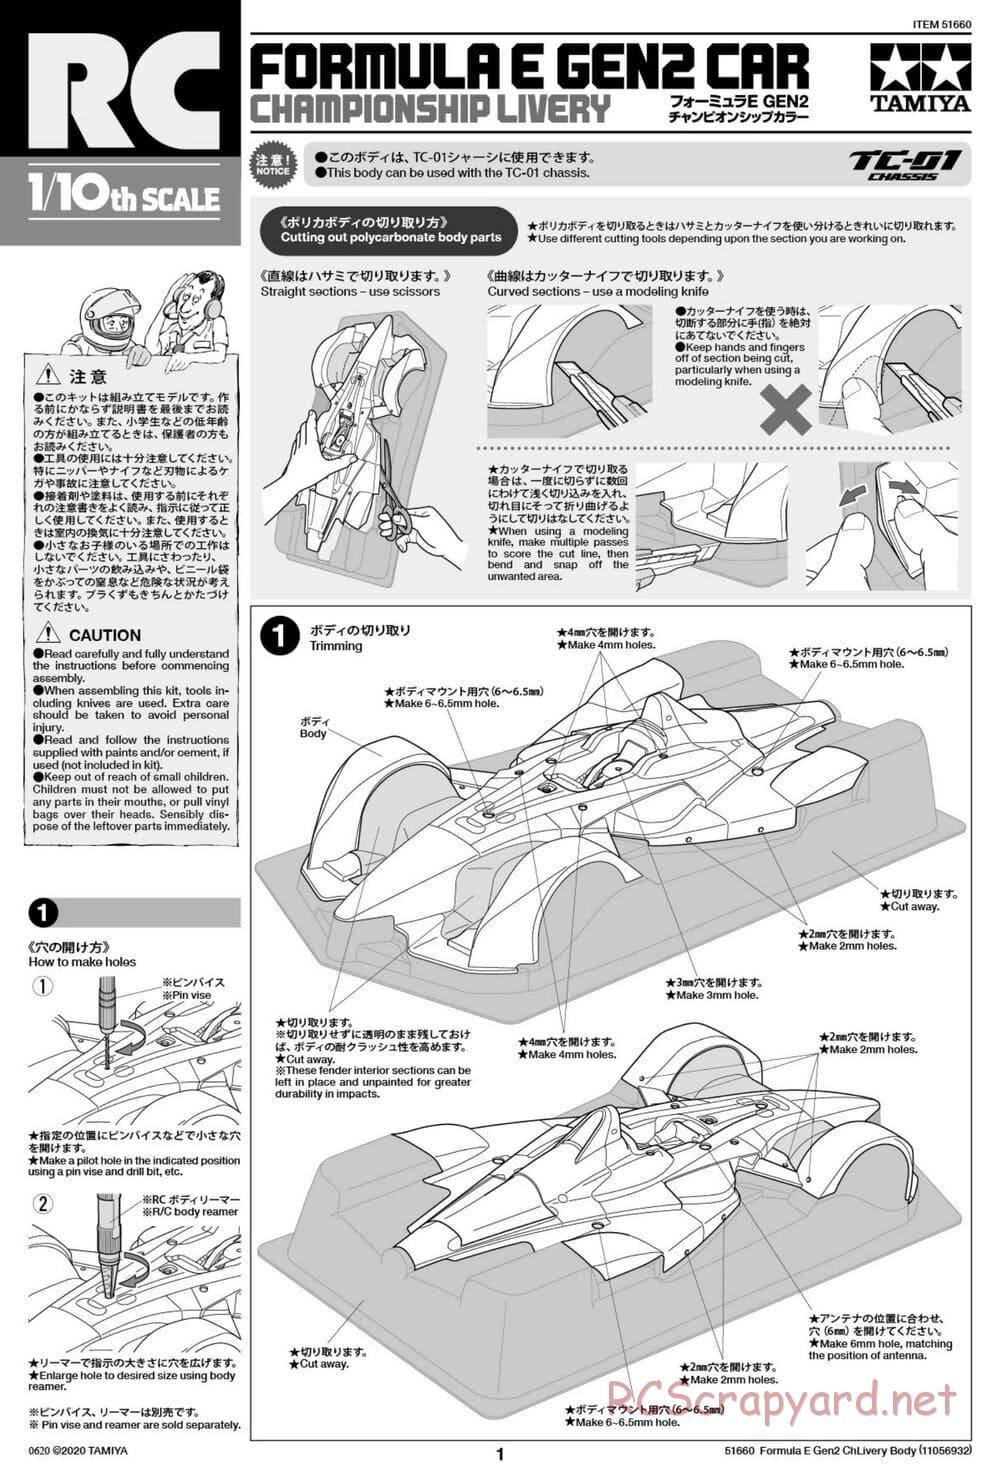 Tamiya - Formula E Gen2 Car - Championship Livery - TC-01 Chassis - Body Manual - Page 1